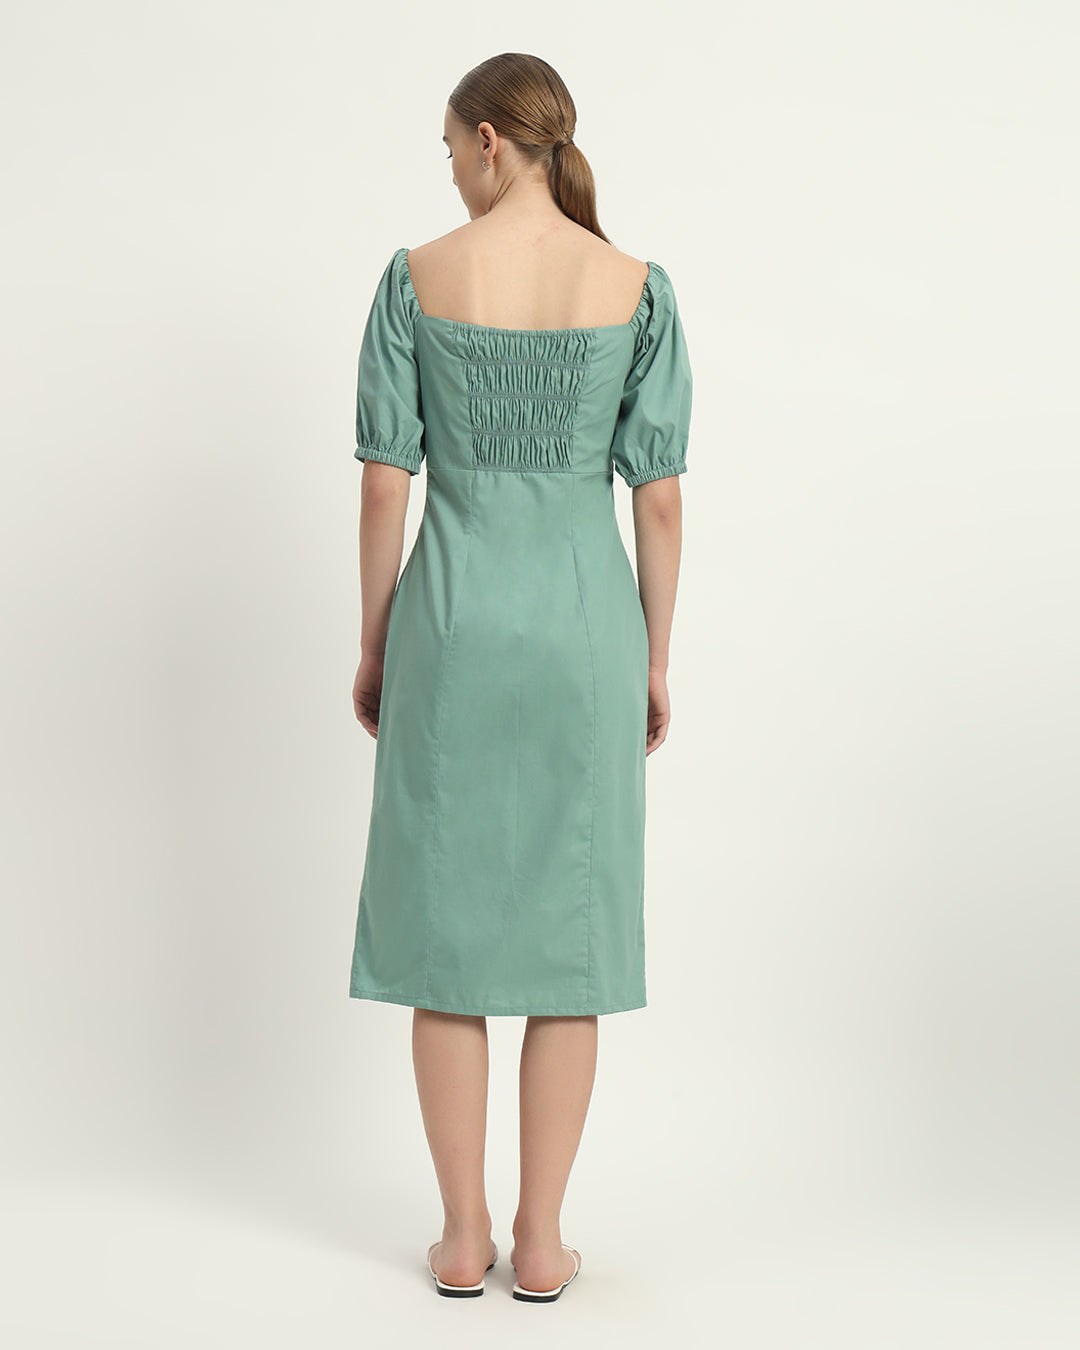 The Erwin Mint Cotton Dress